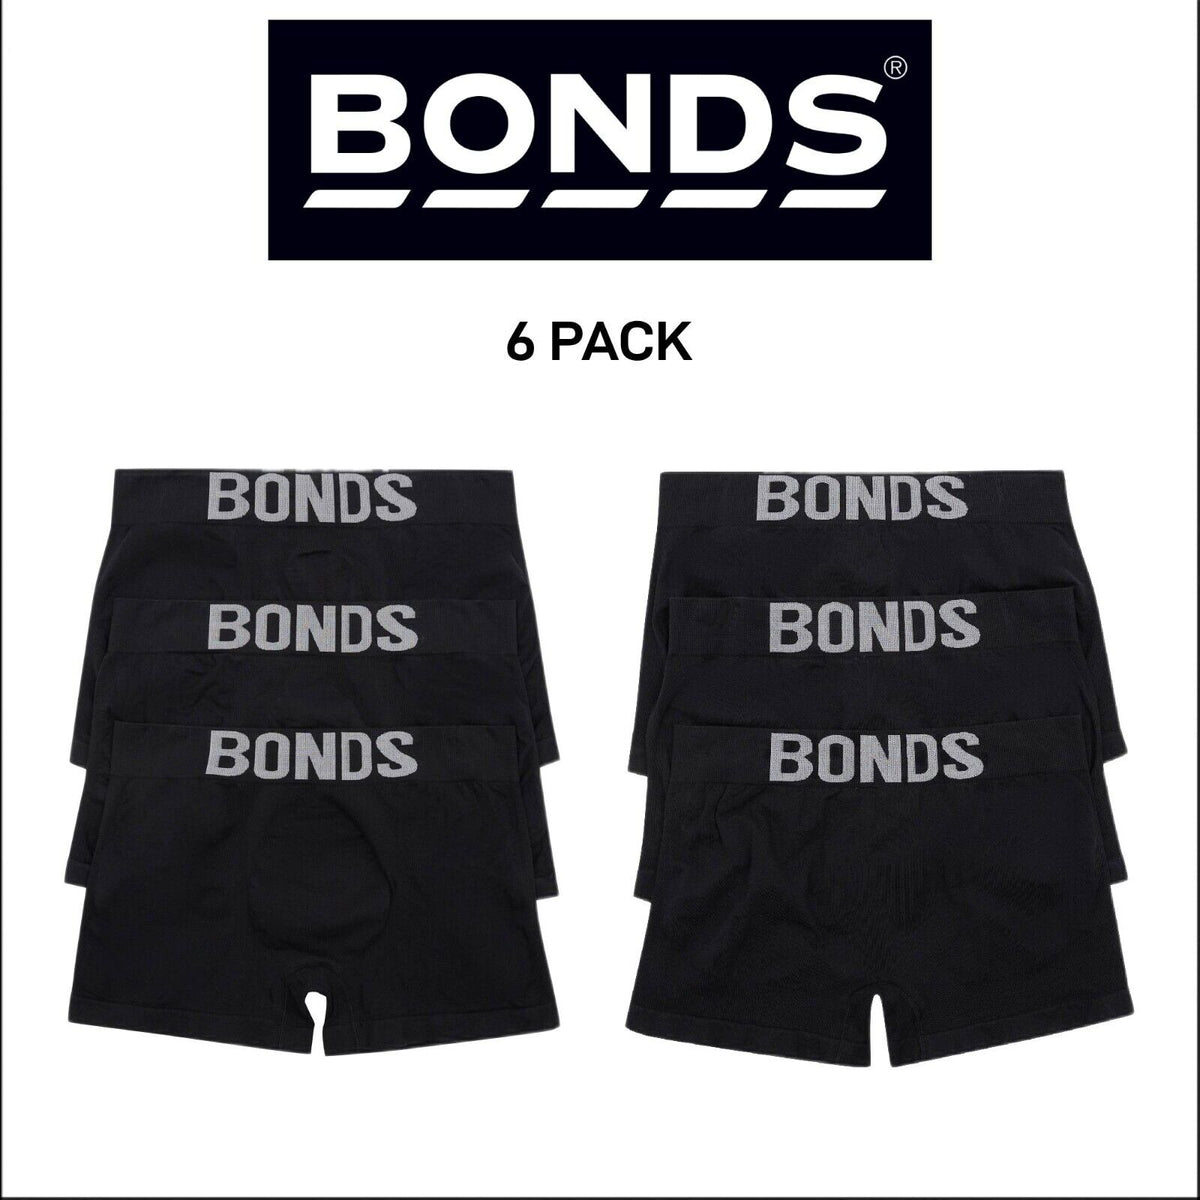 Bonds Mens Seamless Trunk Design for Maximum Comfort and Stretch 6 Pack MXY7A